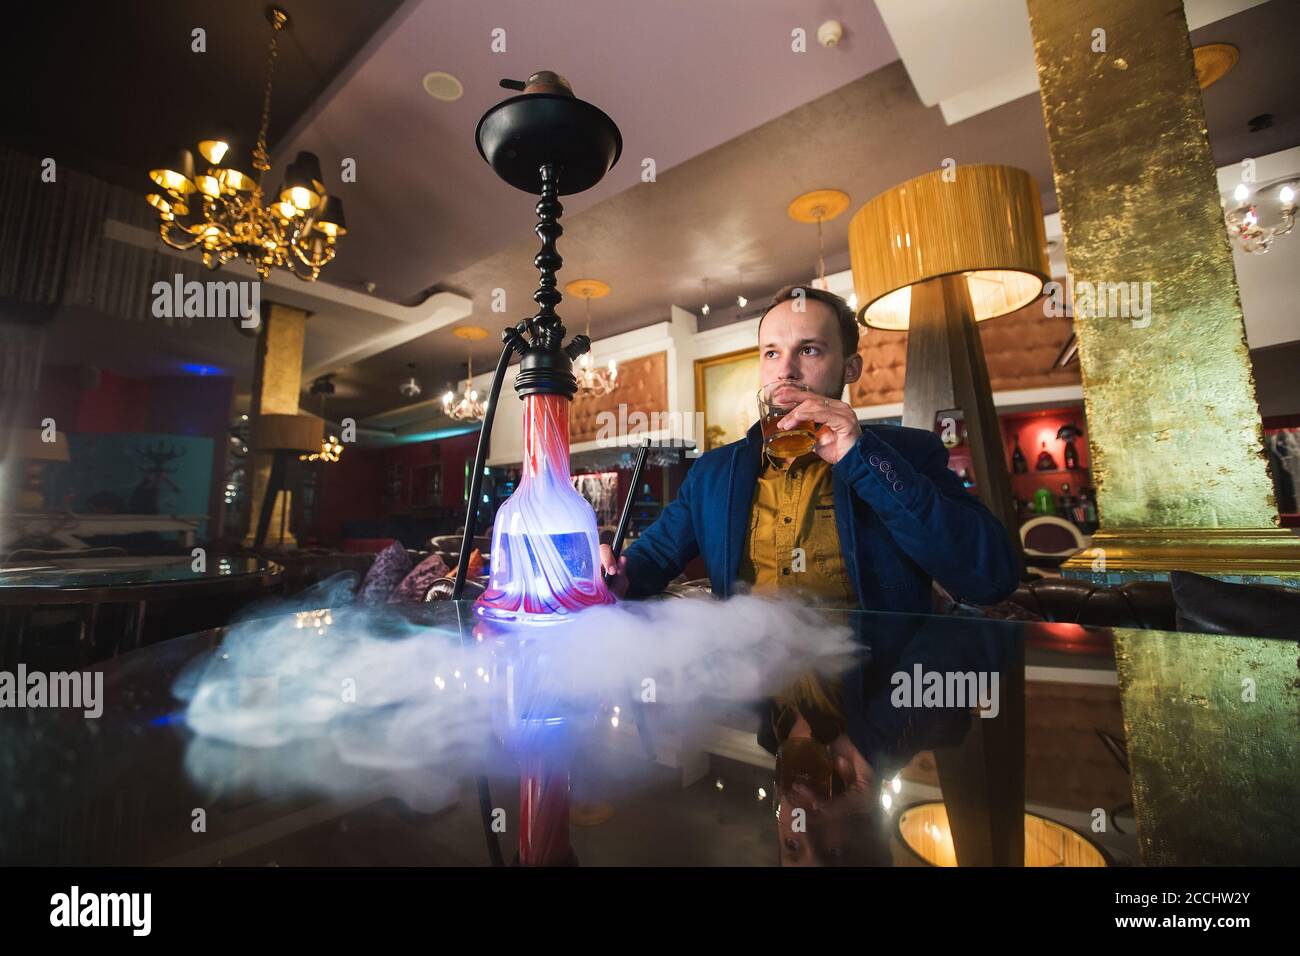 Smoking hookah in a cafe. Man is blowing smoke. Stock Photo